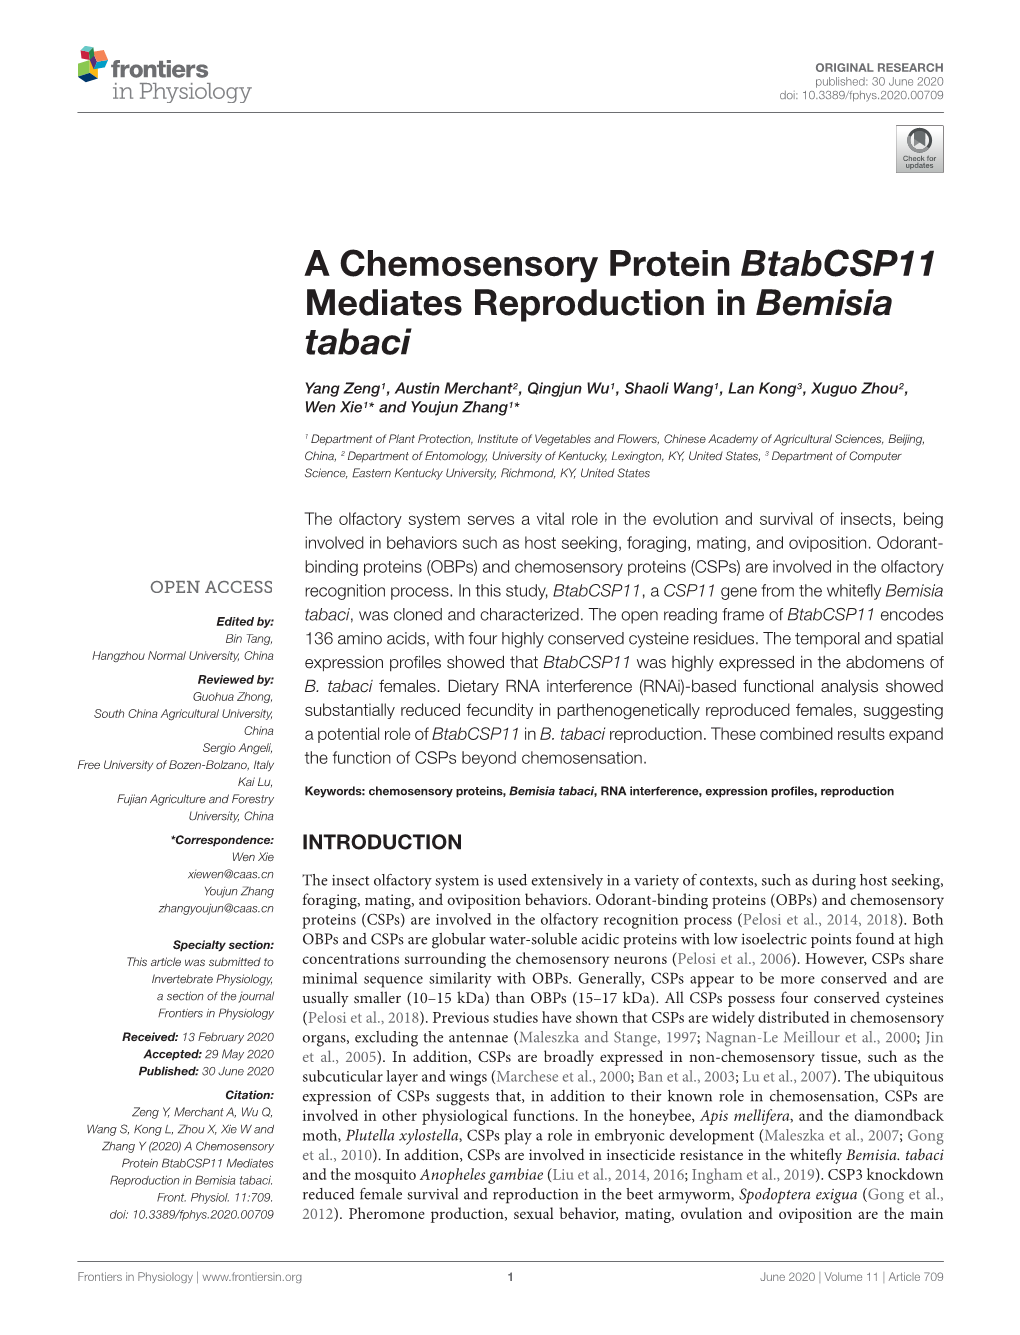 A Chemosensory Protein Btabcsp11 Mediates Reproduction in Bemisia Tabaci